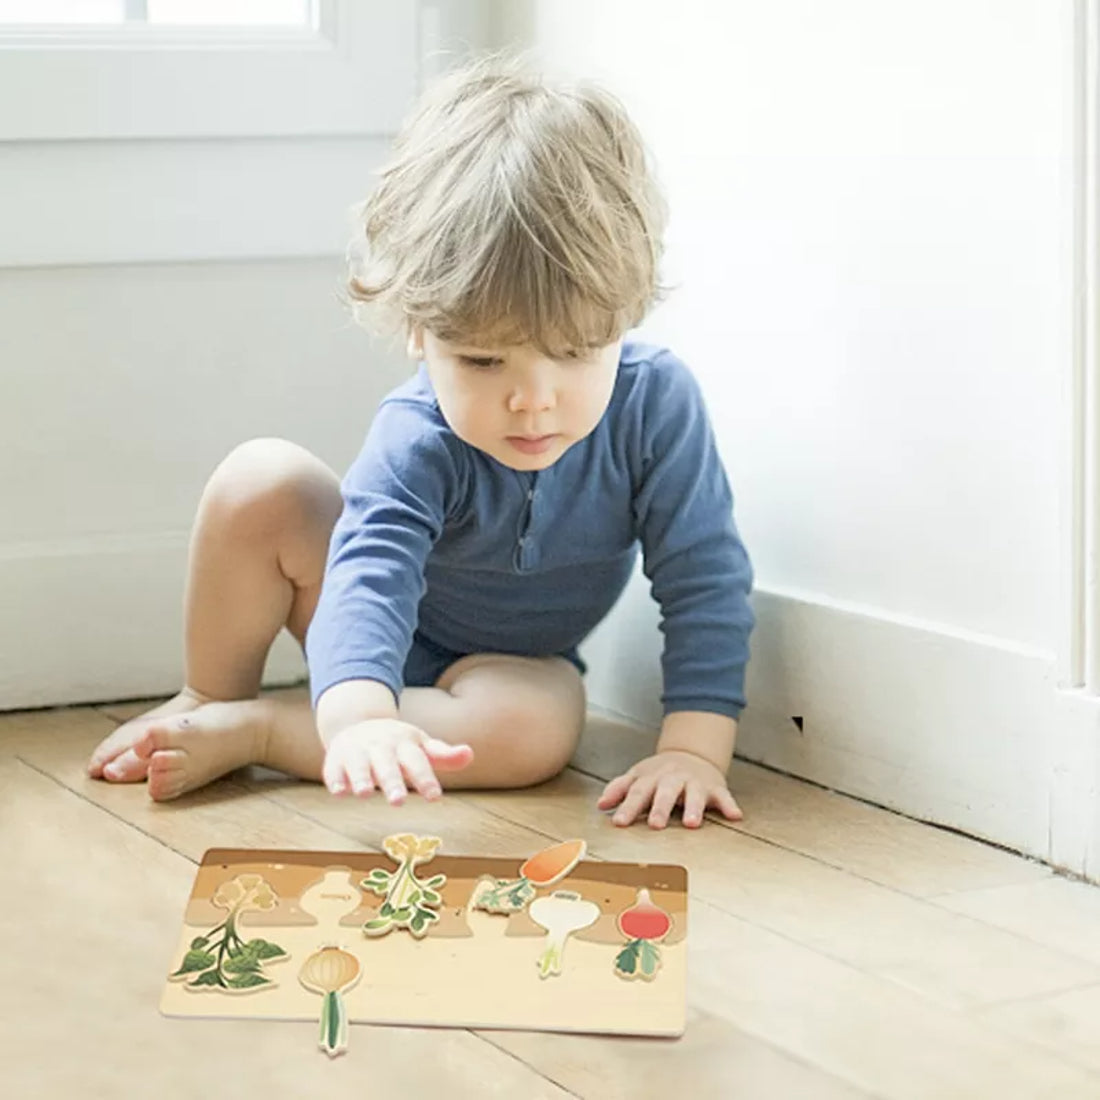 Montessori Vegetable Wood Board Toy Puzzle Image 1.jpg